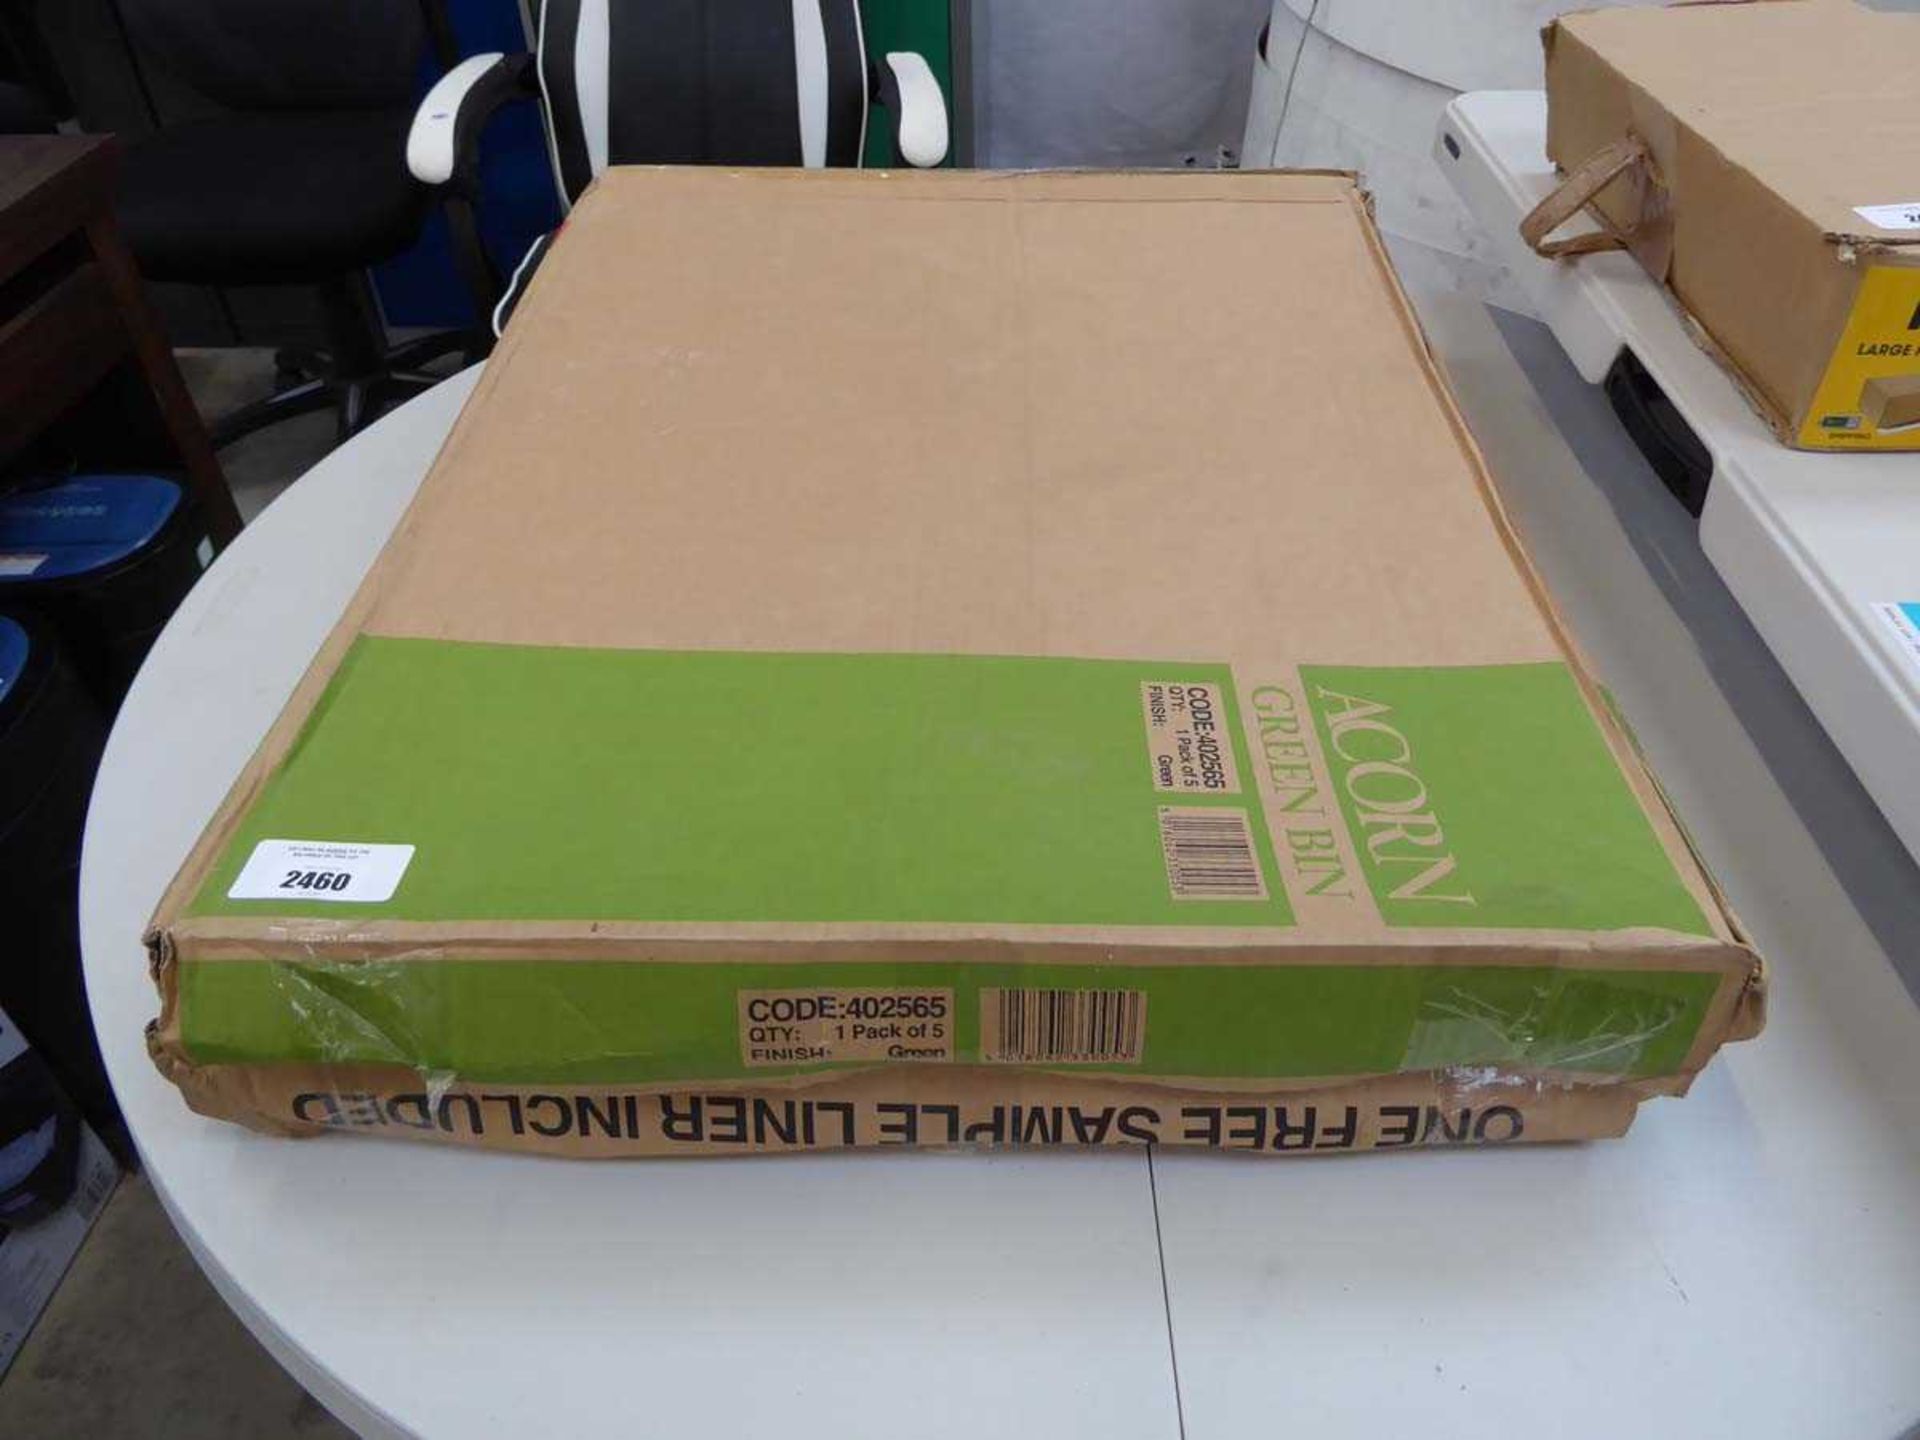 +VAT 2 boxes of Acorn branded flat pack cardboard boxes (2 packs of 5)